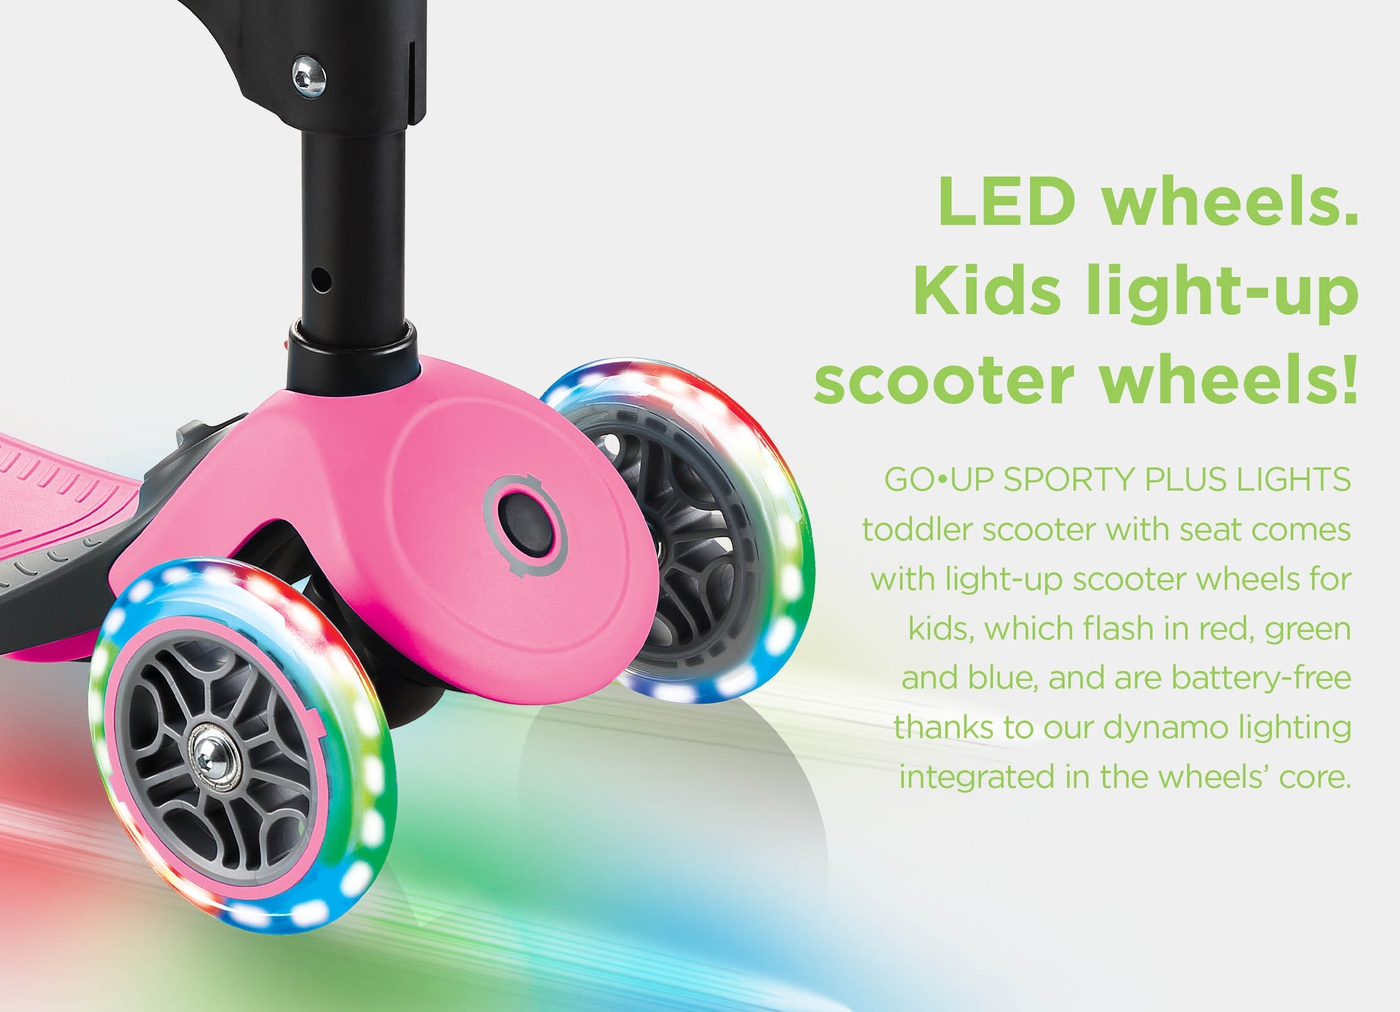  LED wheels. Kids light-up scooter wheels!